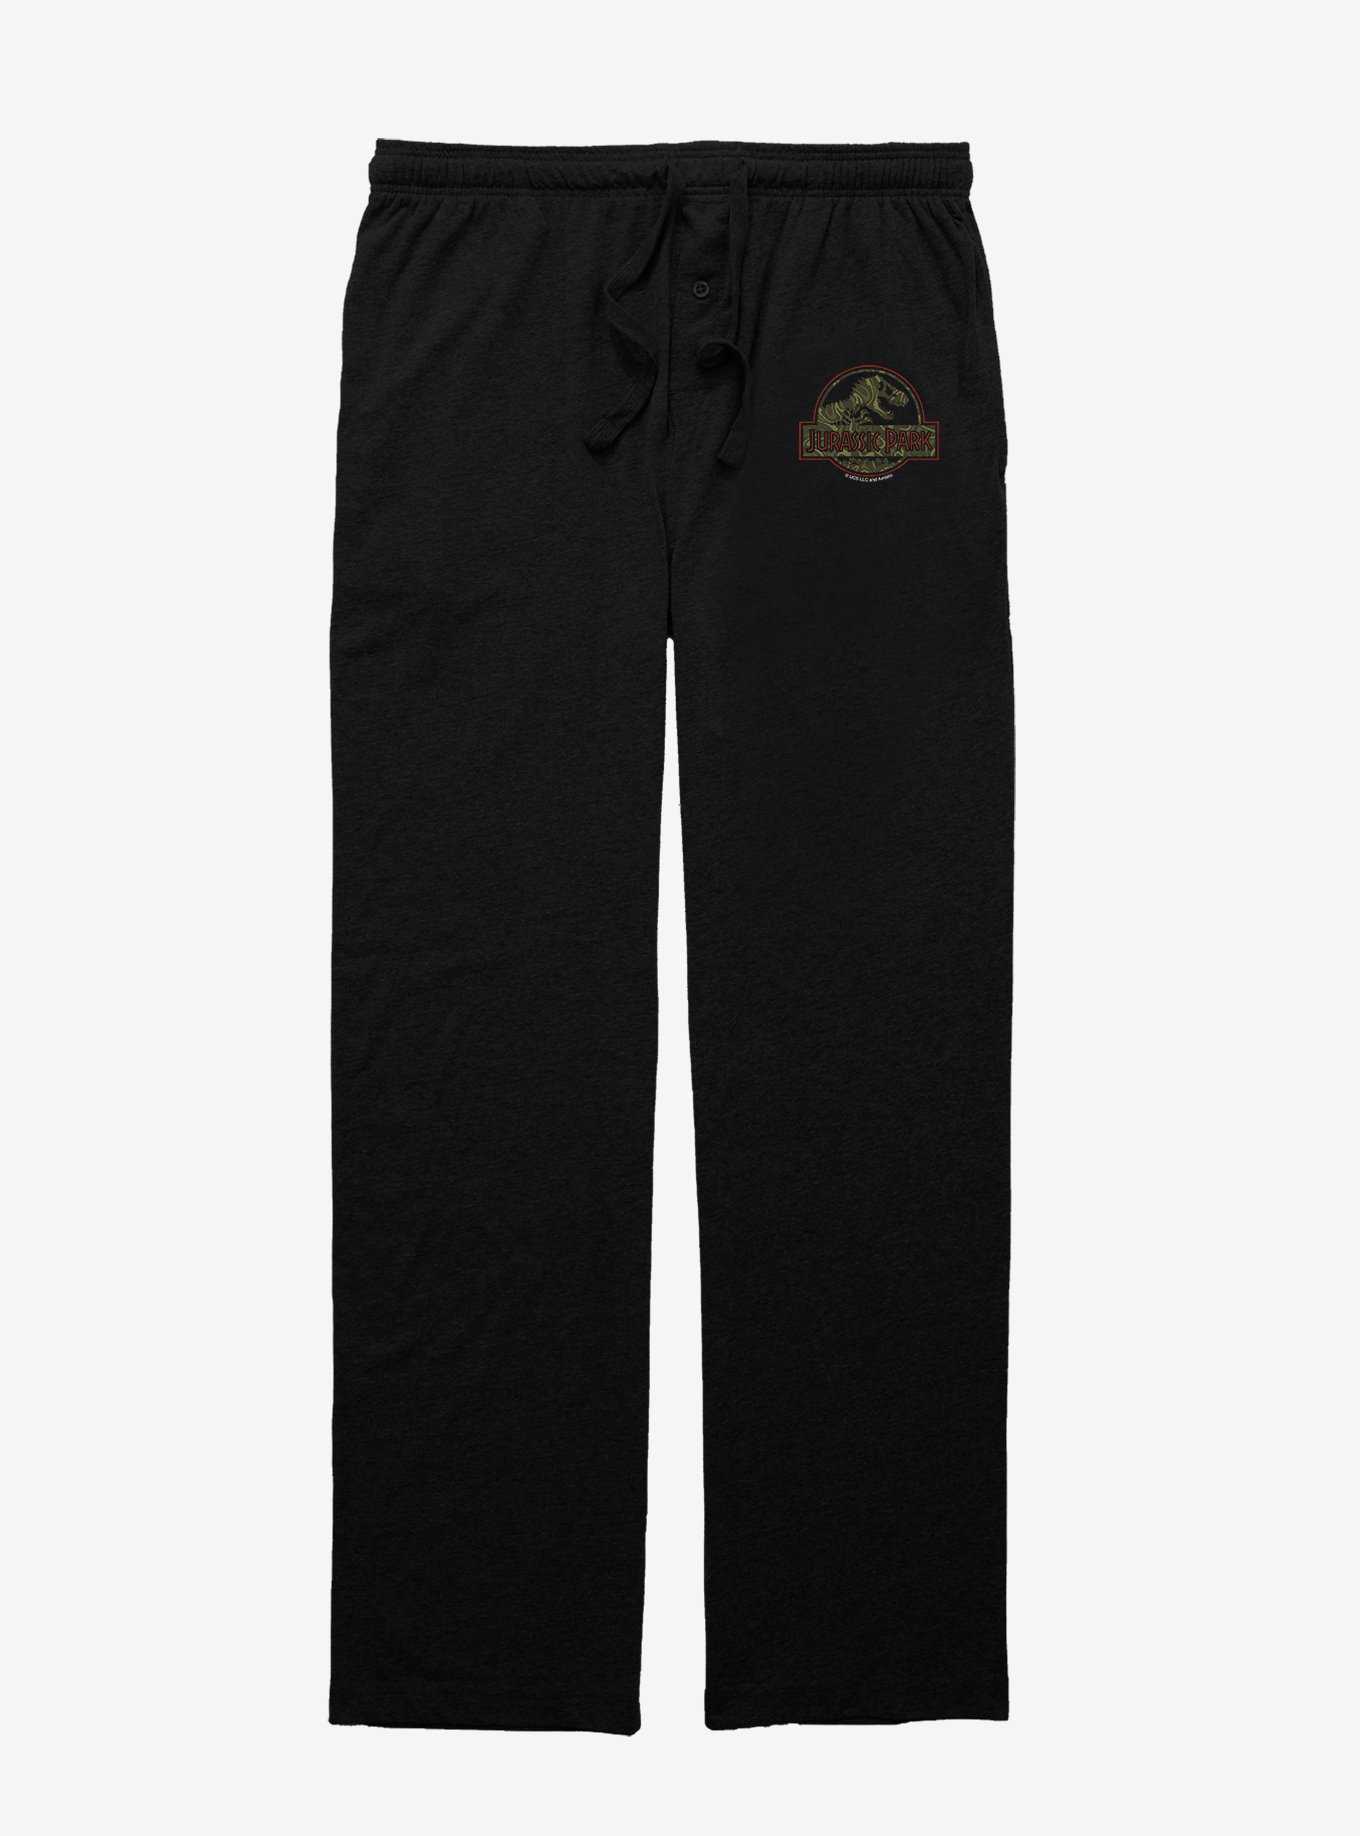 Jurassic Park Camo Logo Pajama Pants, , hi-res